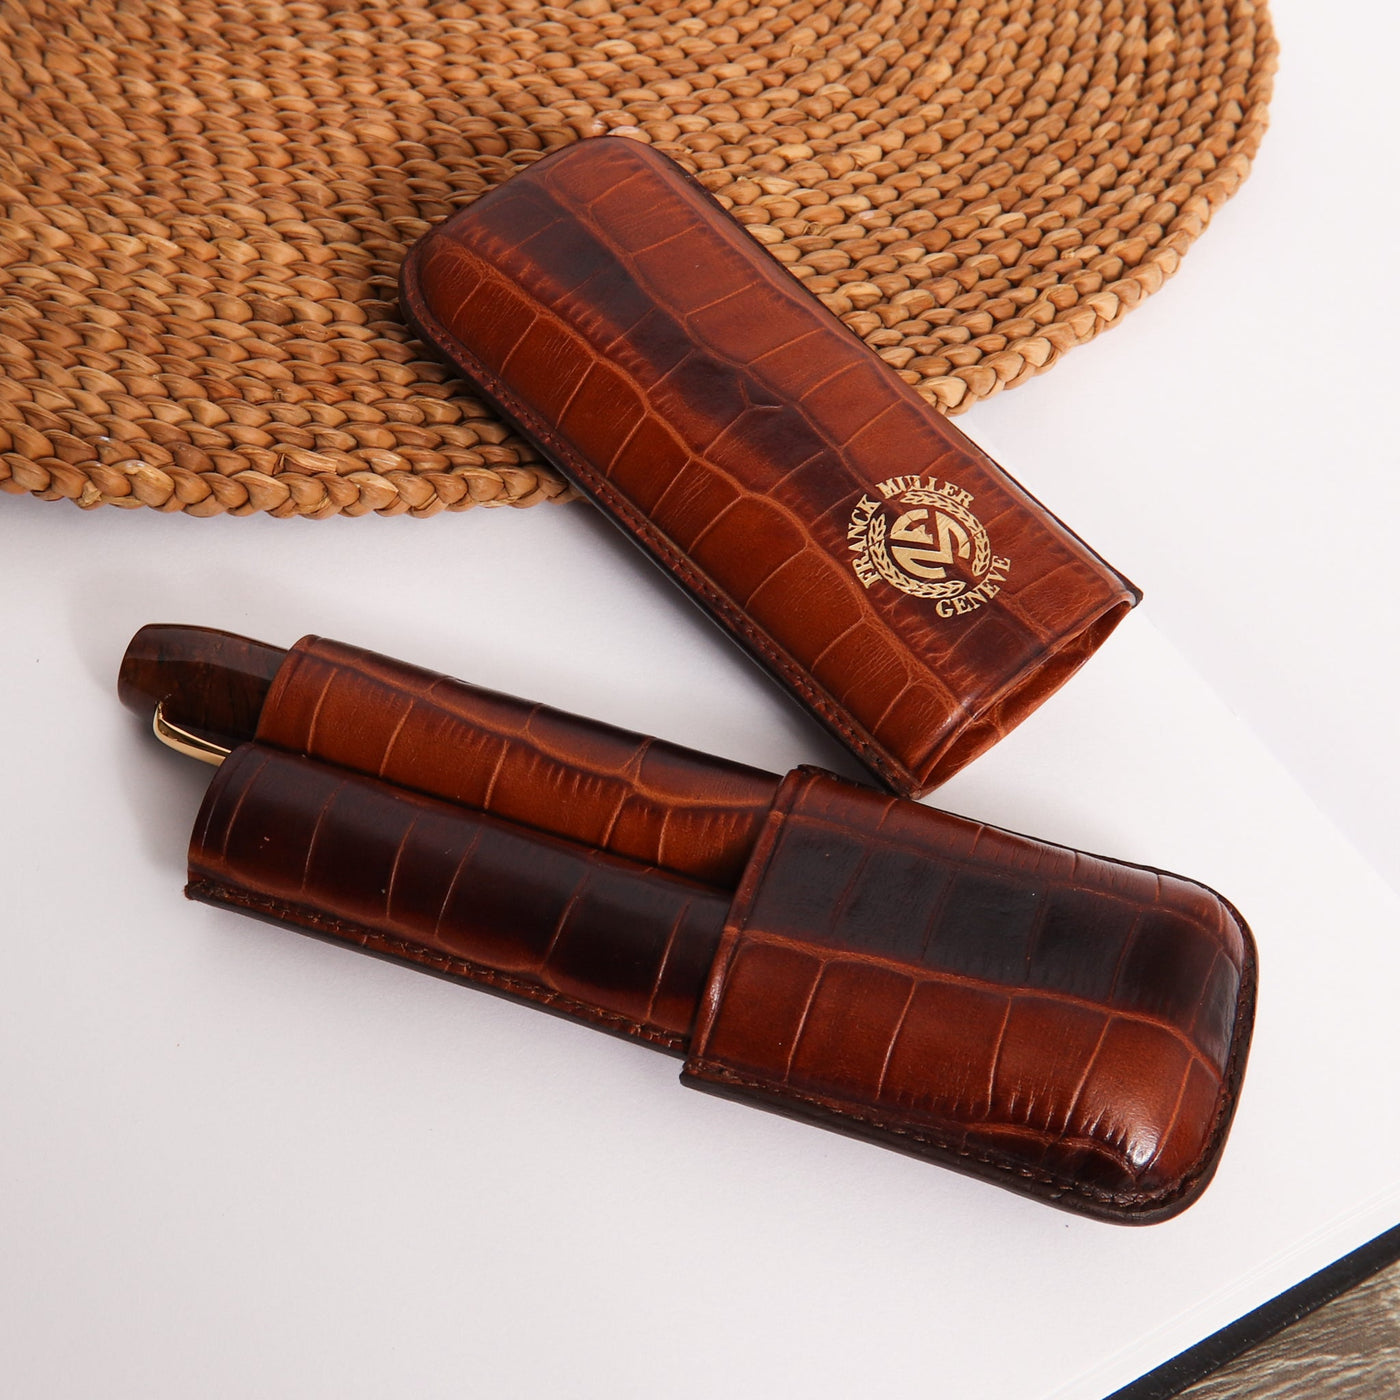 Franck-Muller-by-Omas-Cigar-Briarwood-Limited-Edition-Fountain-Pen-Inside-Case